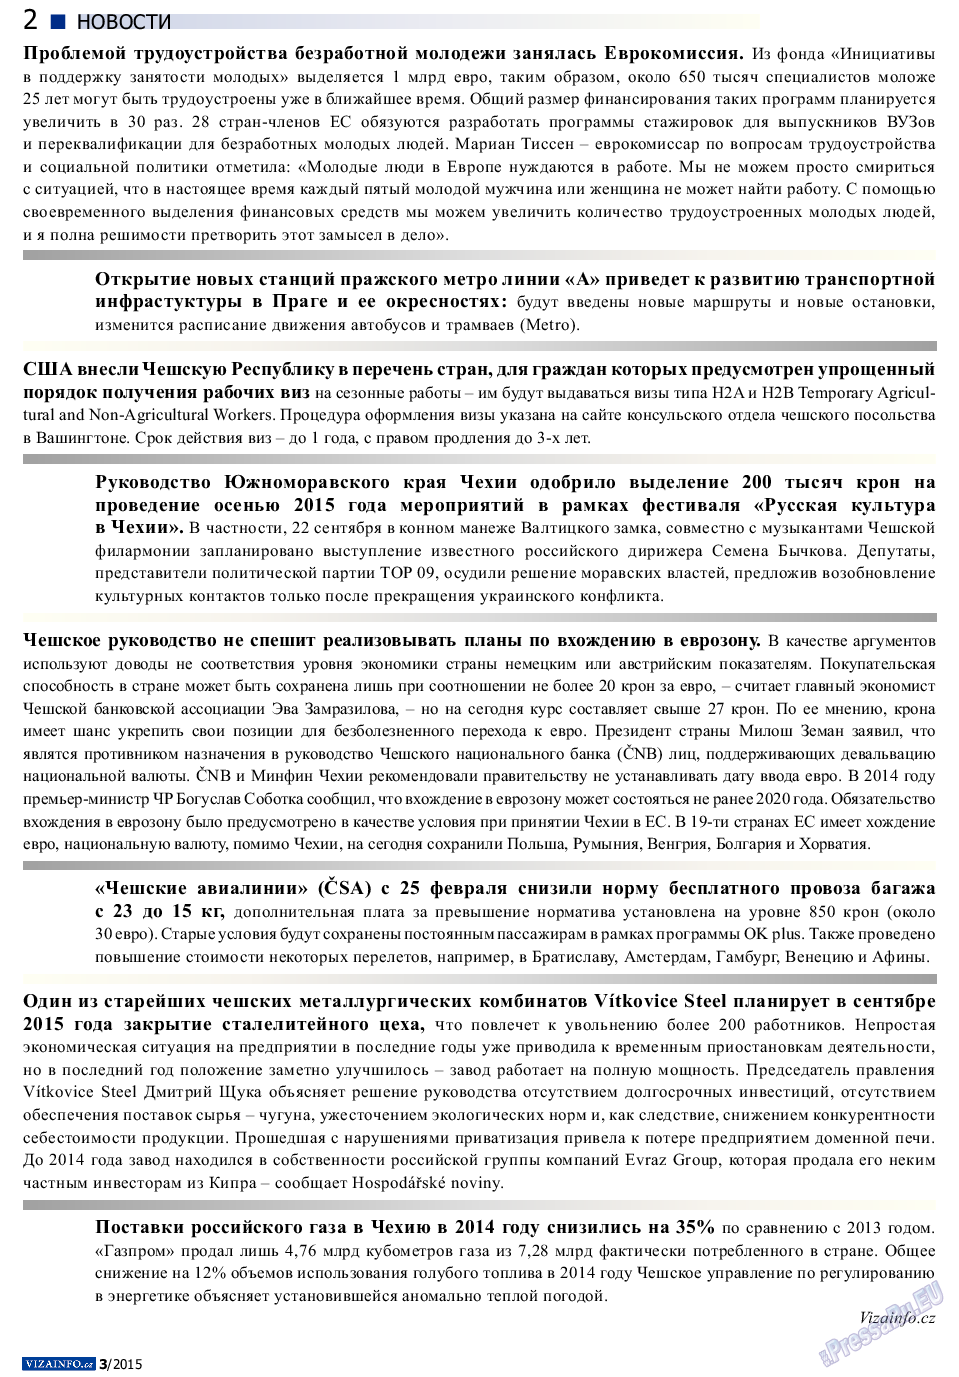 Vizainfo.cz, газета. 2015 №66 стр.2